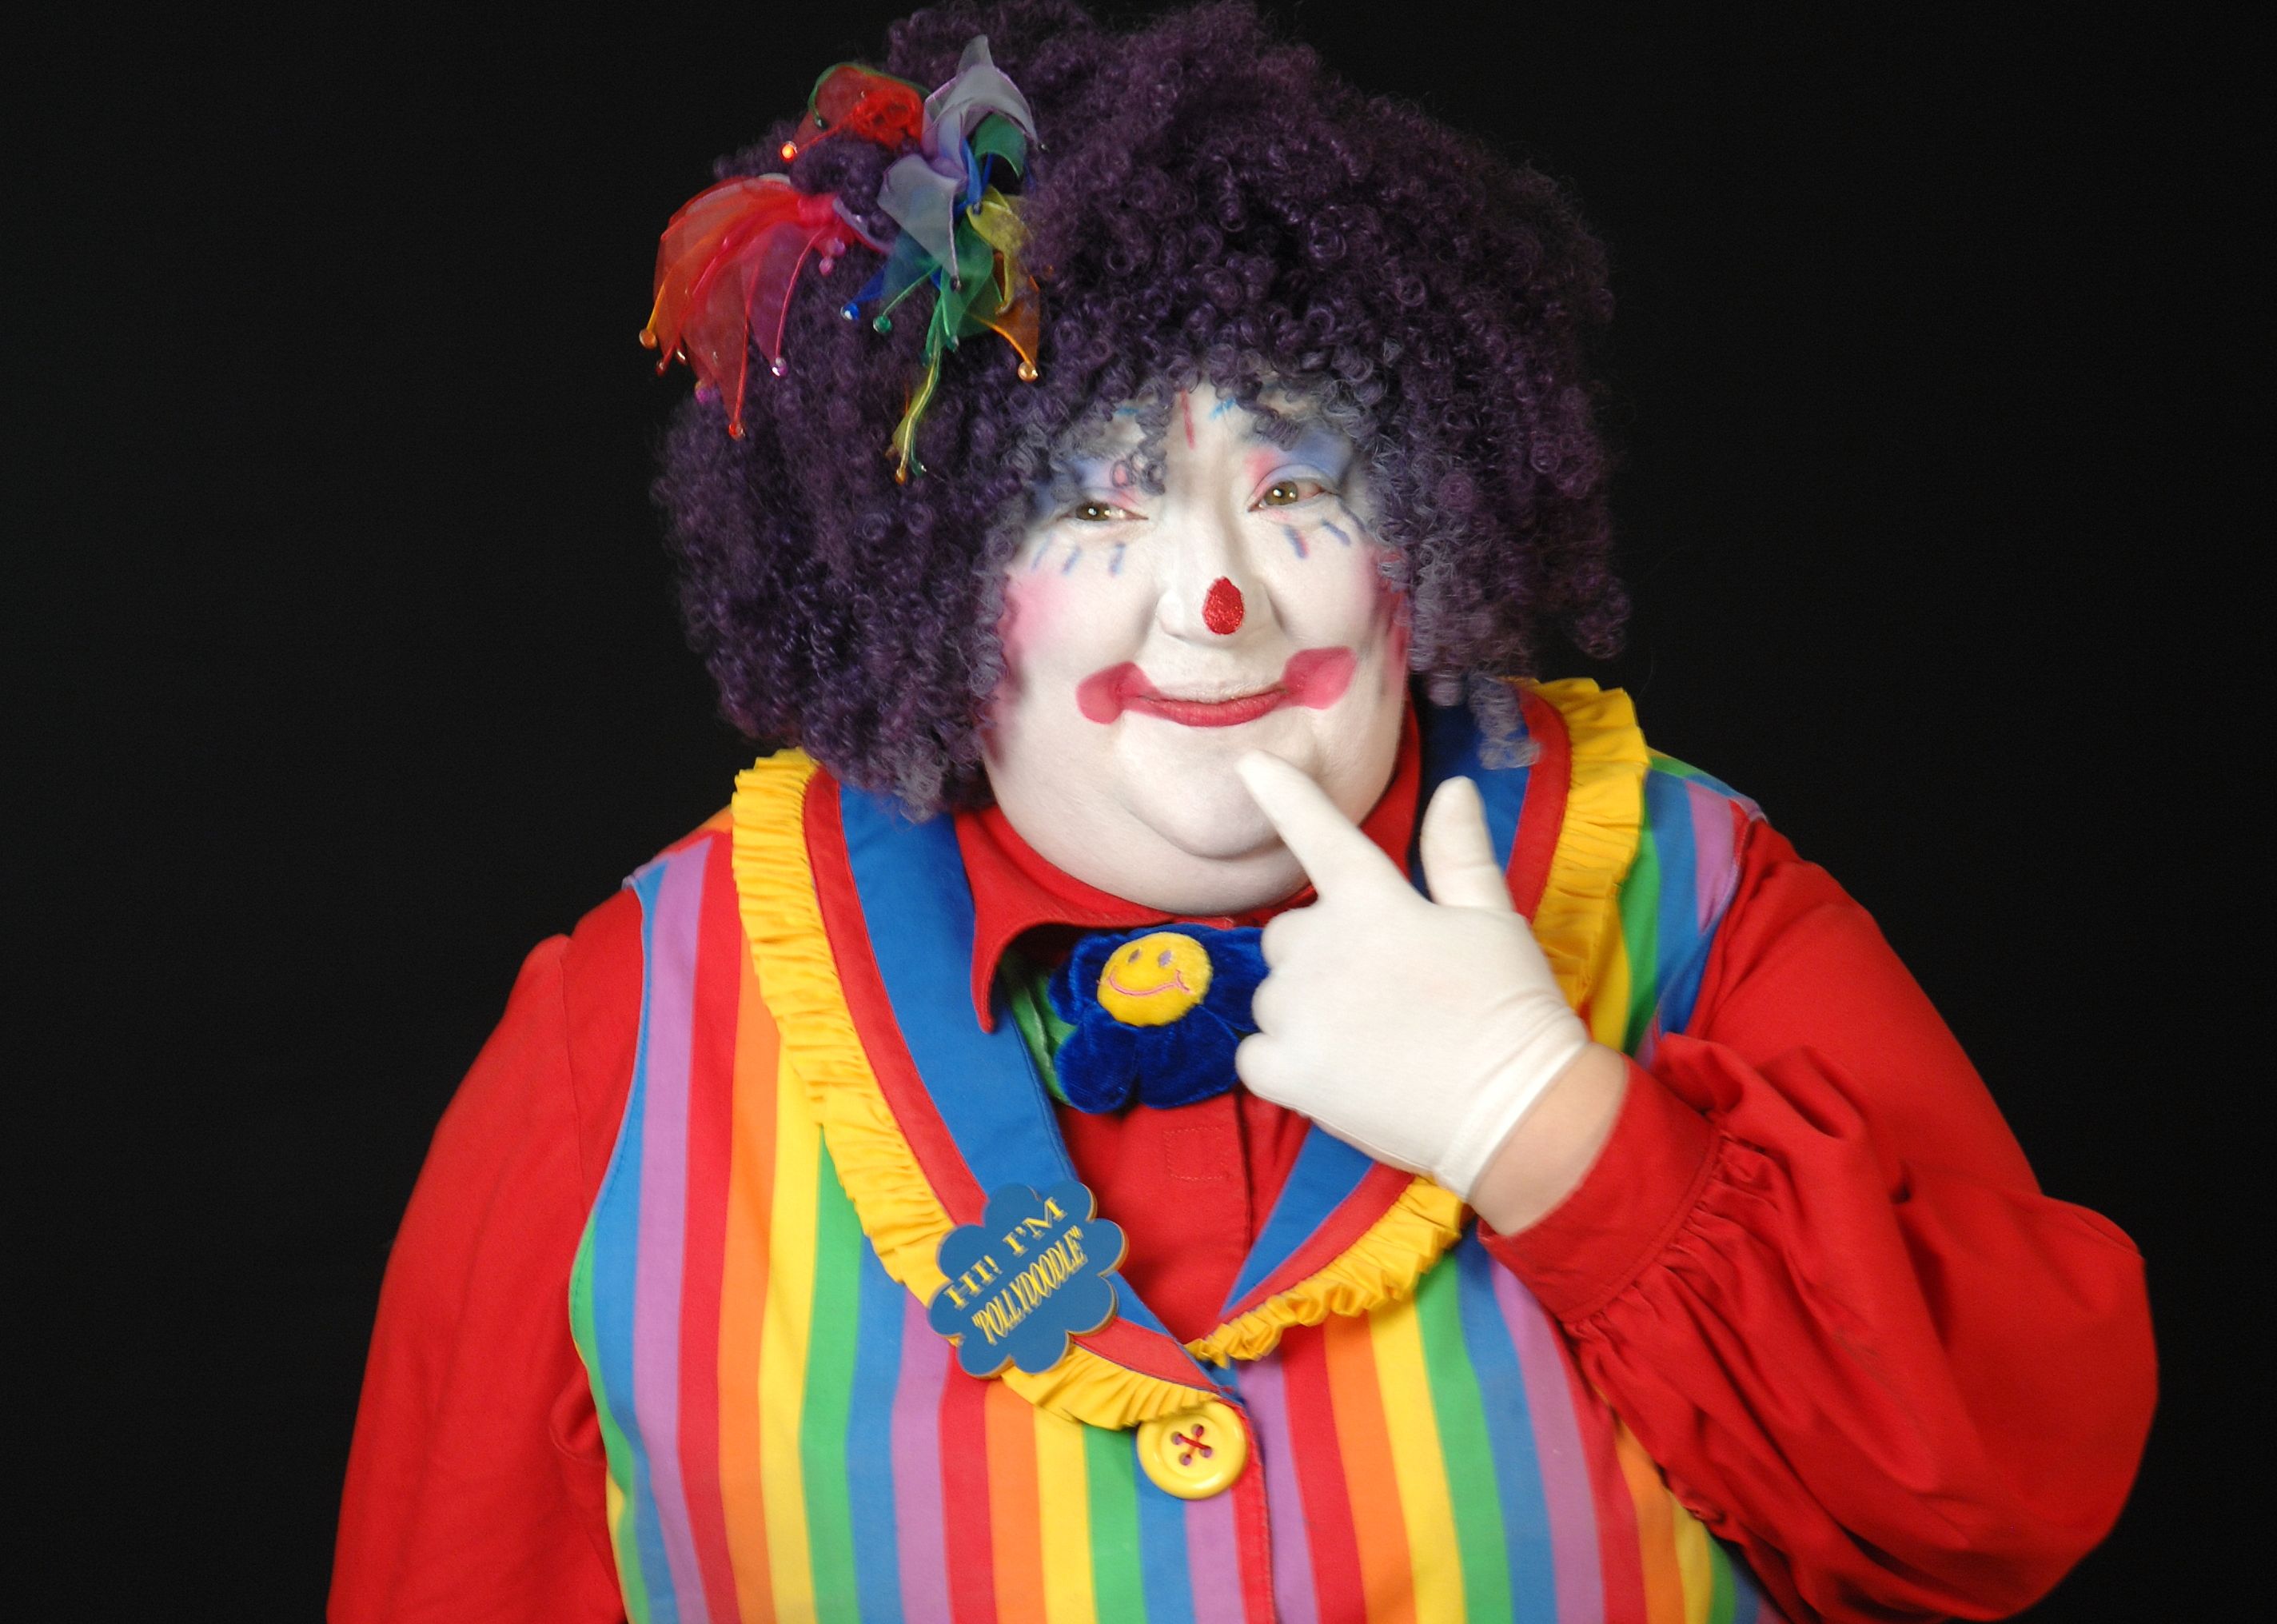 Clown Birthday party entertainment | Other Halloween | Pinterest ...